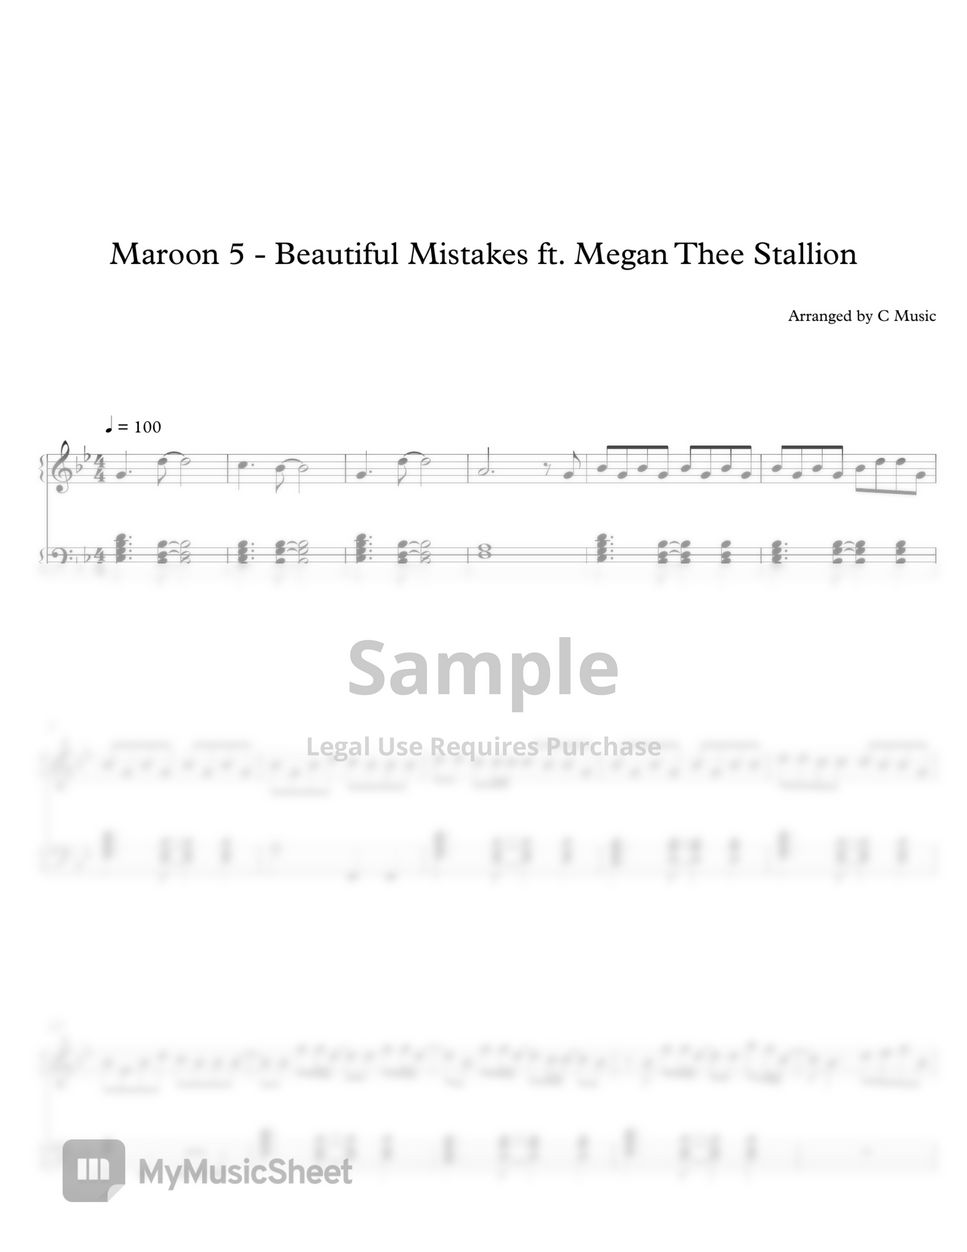 Maroon 5 - Beautiful Mistakes ft. Megan Thee Stallion (Official